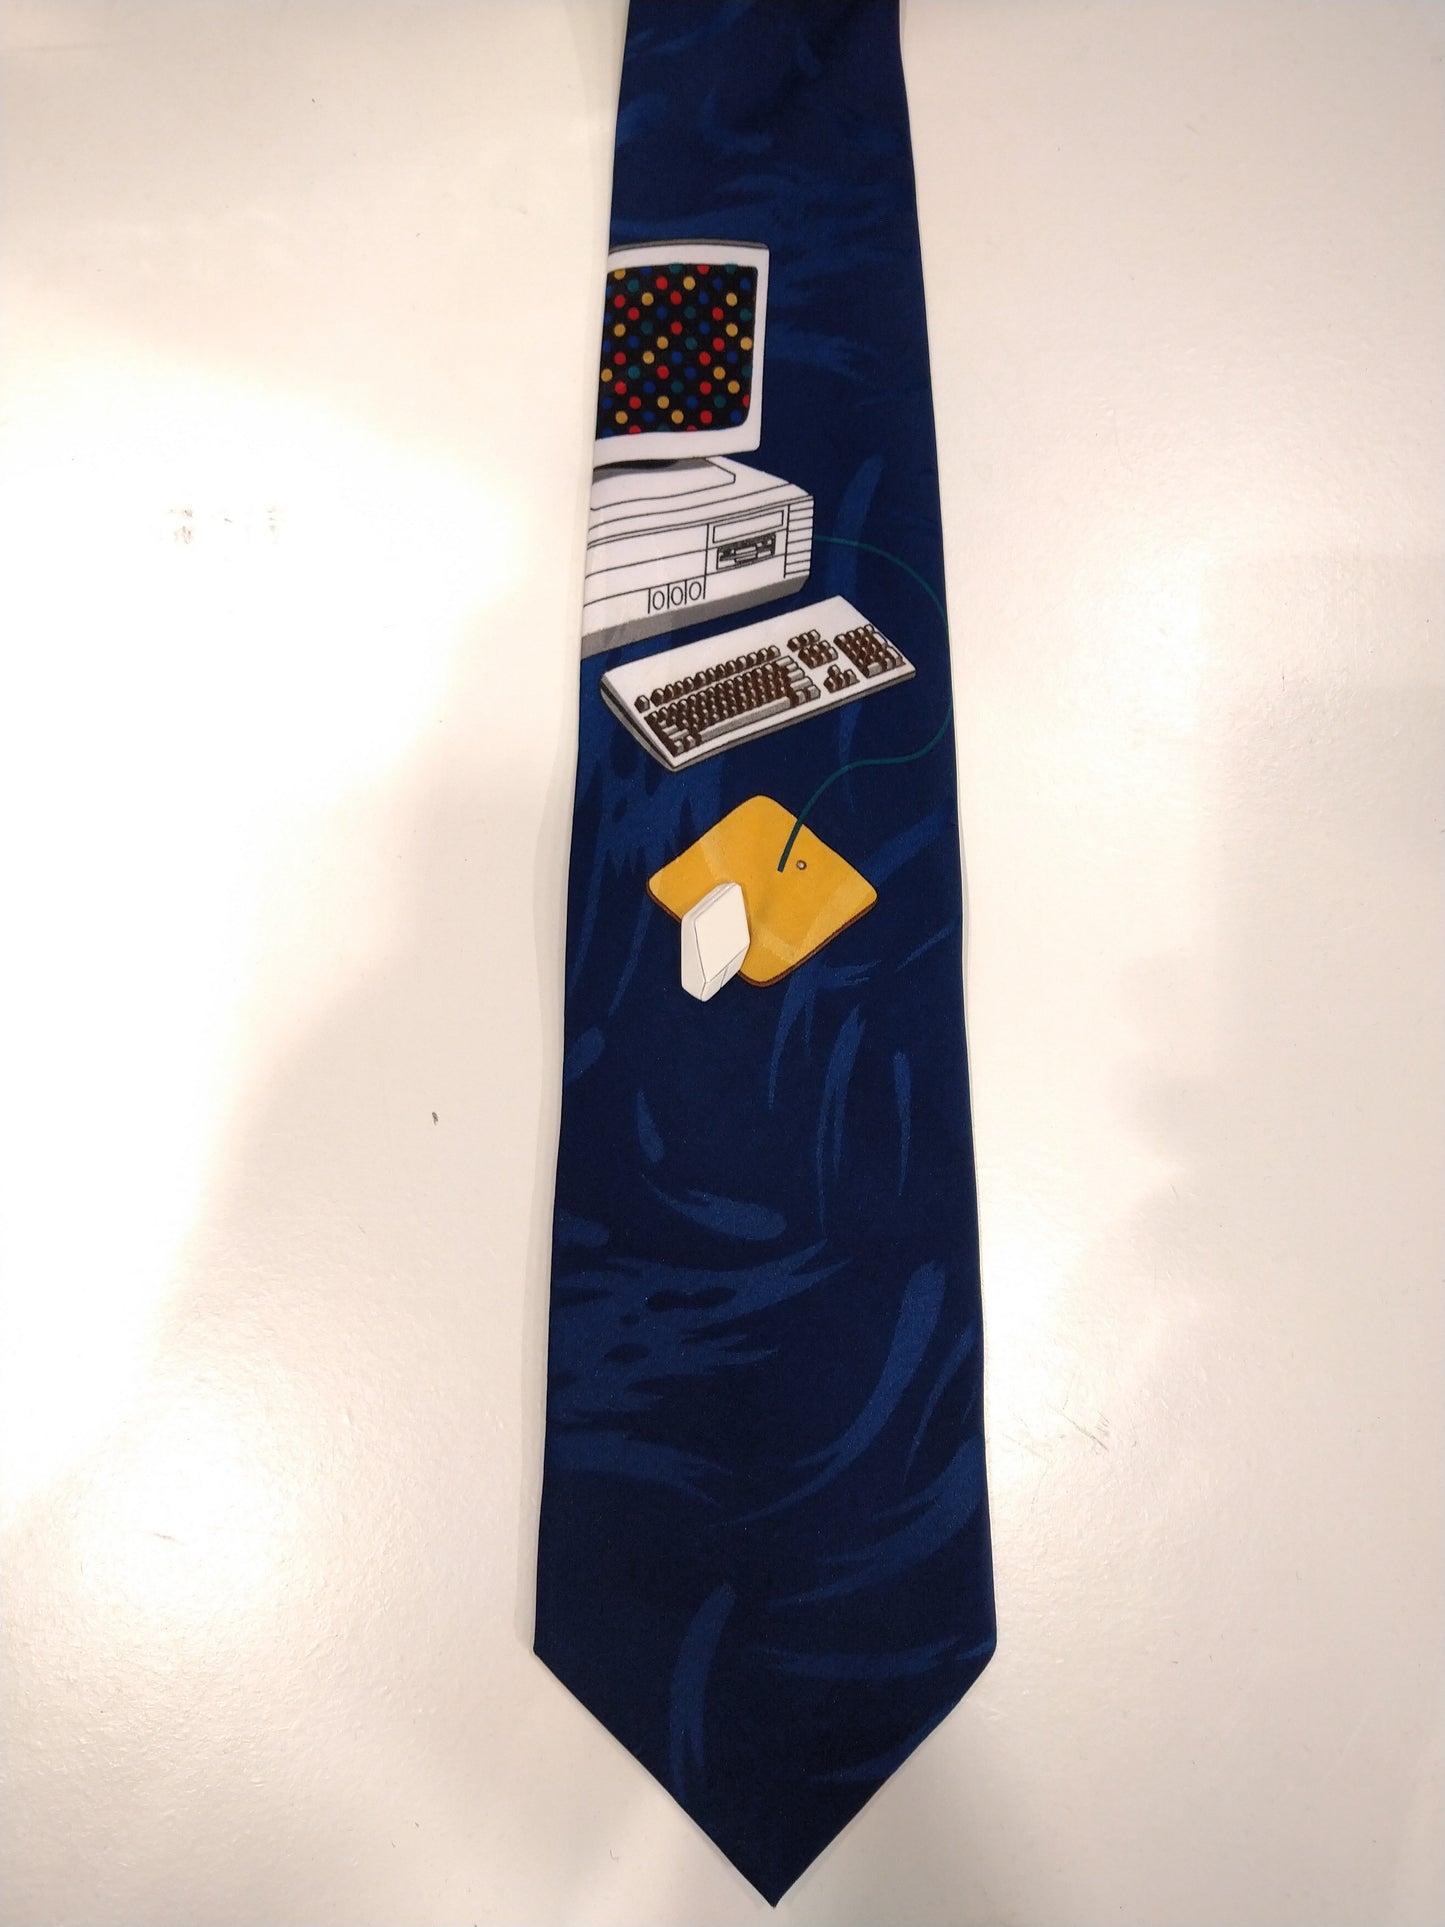 Víntesis Vicky Davis Polyester la corbata. PC con motivo de ratón 3D.